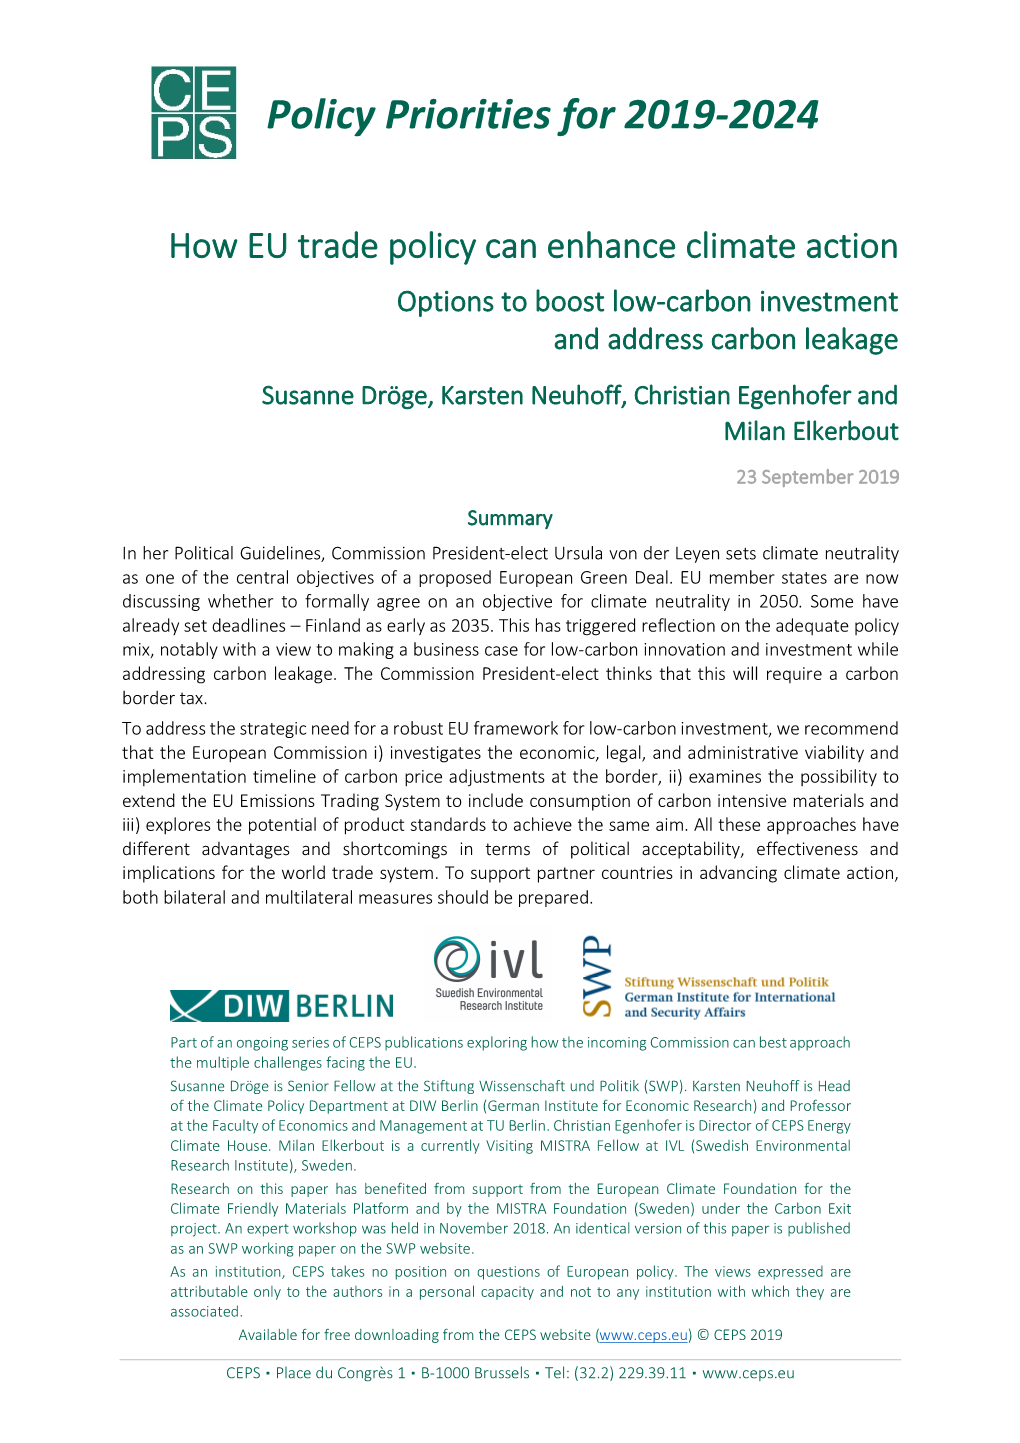 How EU Trade Policy Can Enhance Climate